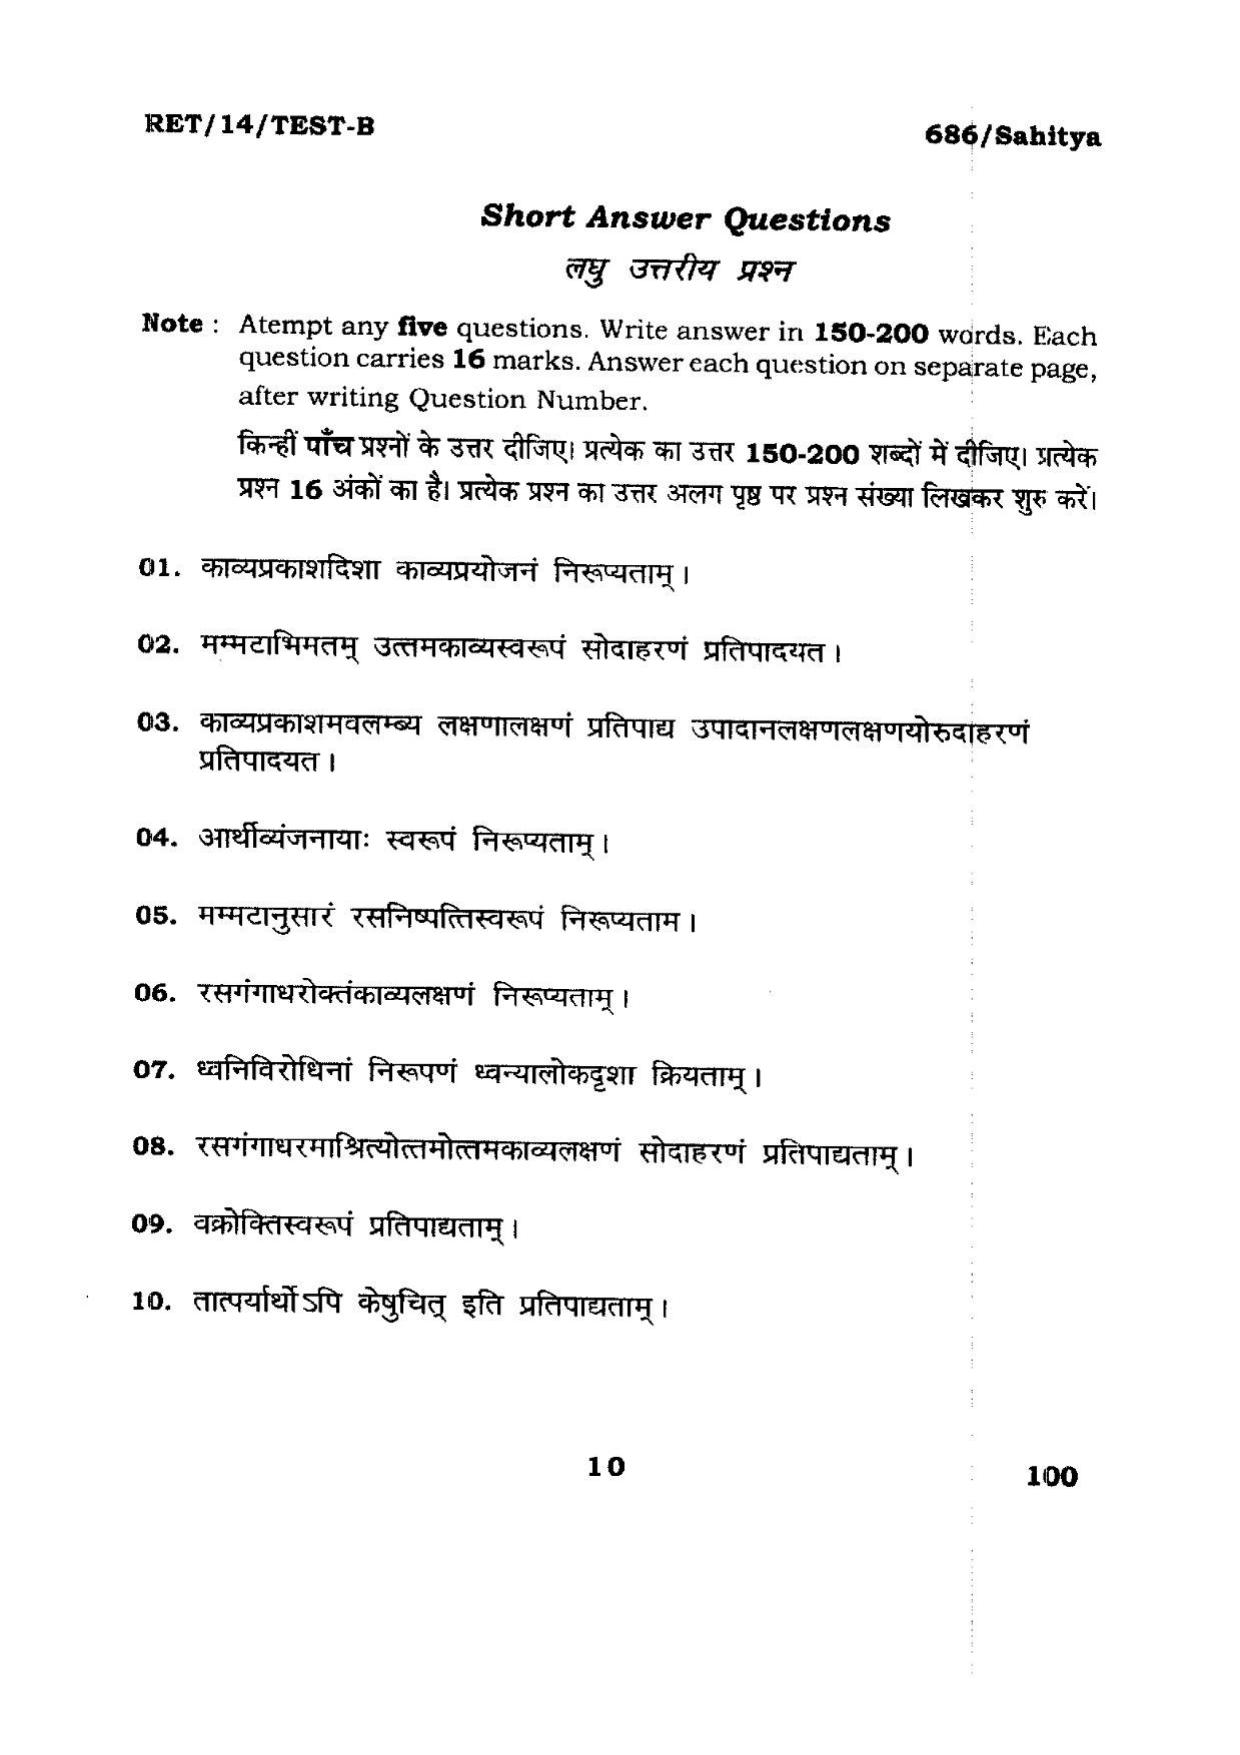 BHU RET Sahitya 2014 Question Paper - Page 10